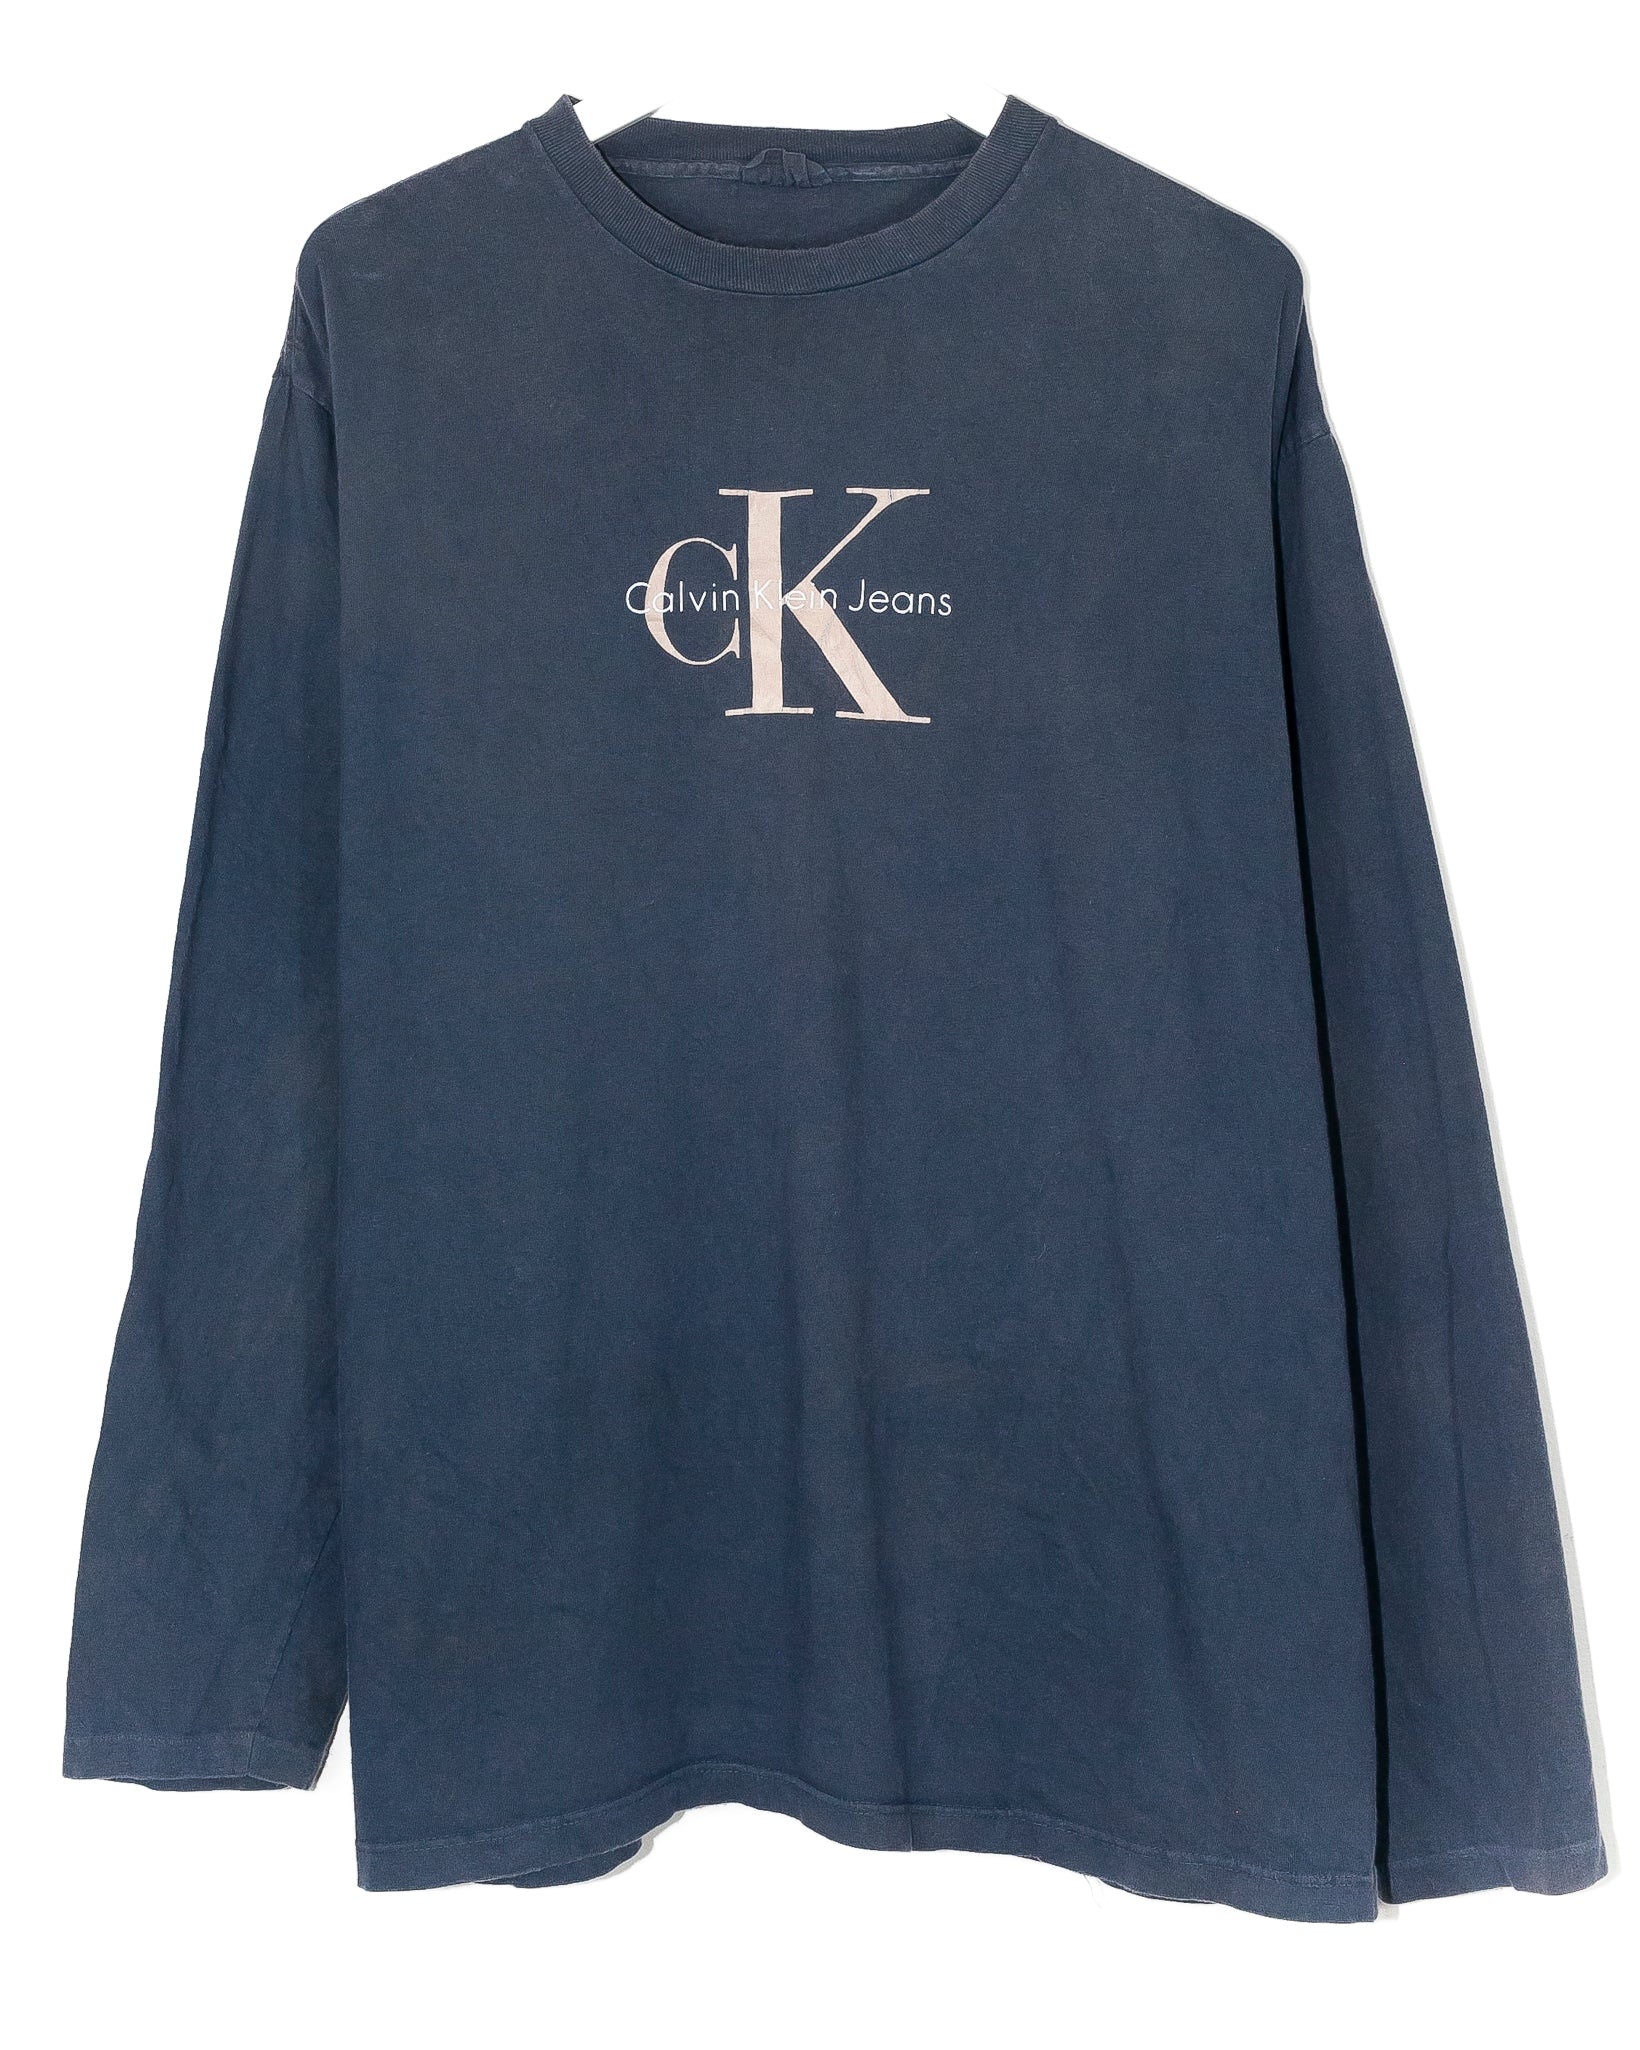 Vintage Celvin Klein Long Sleeve T-Shirt (XL)